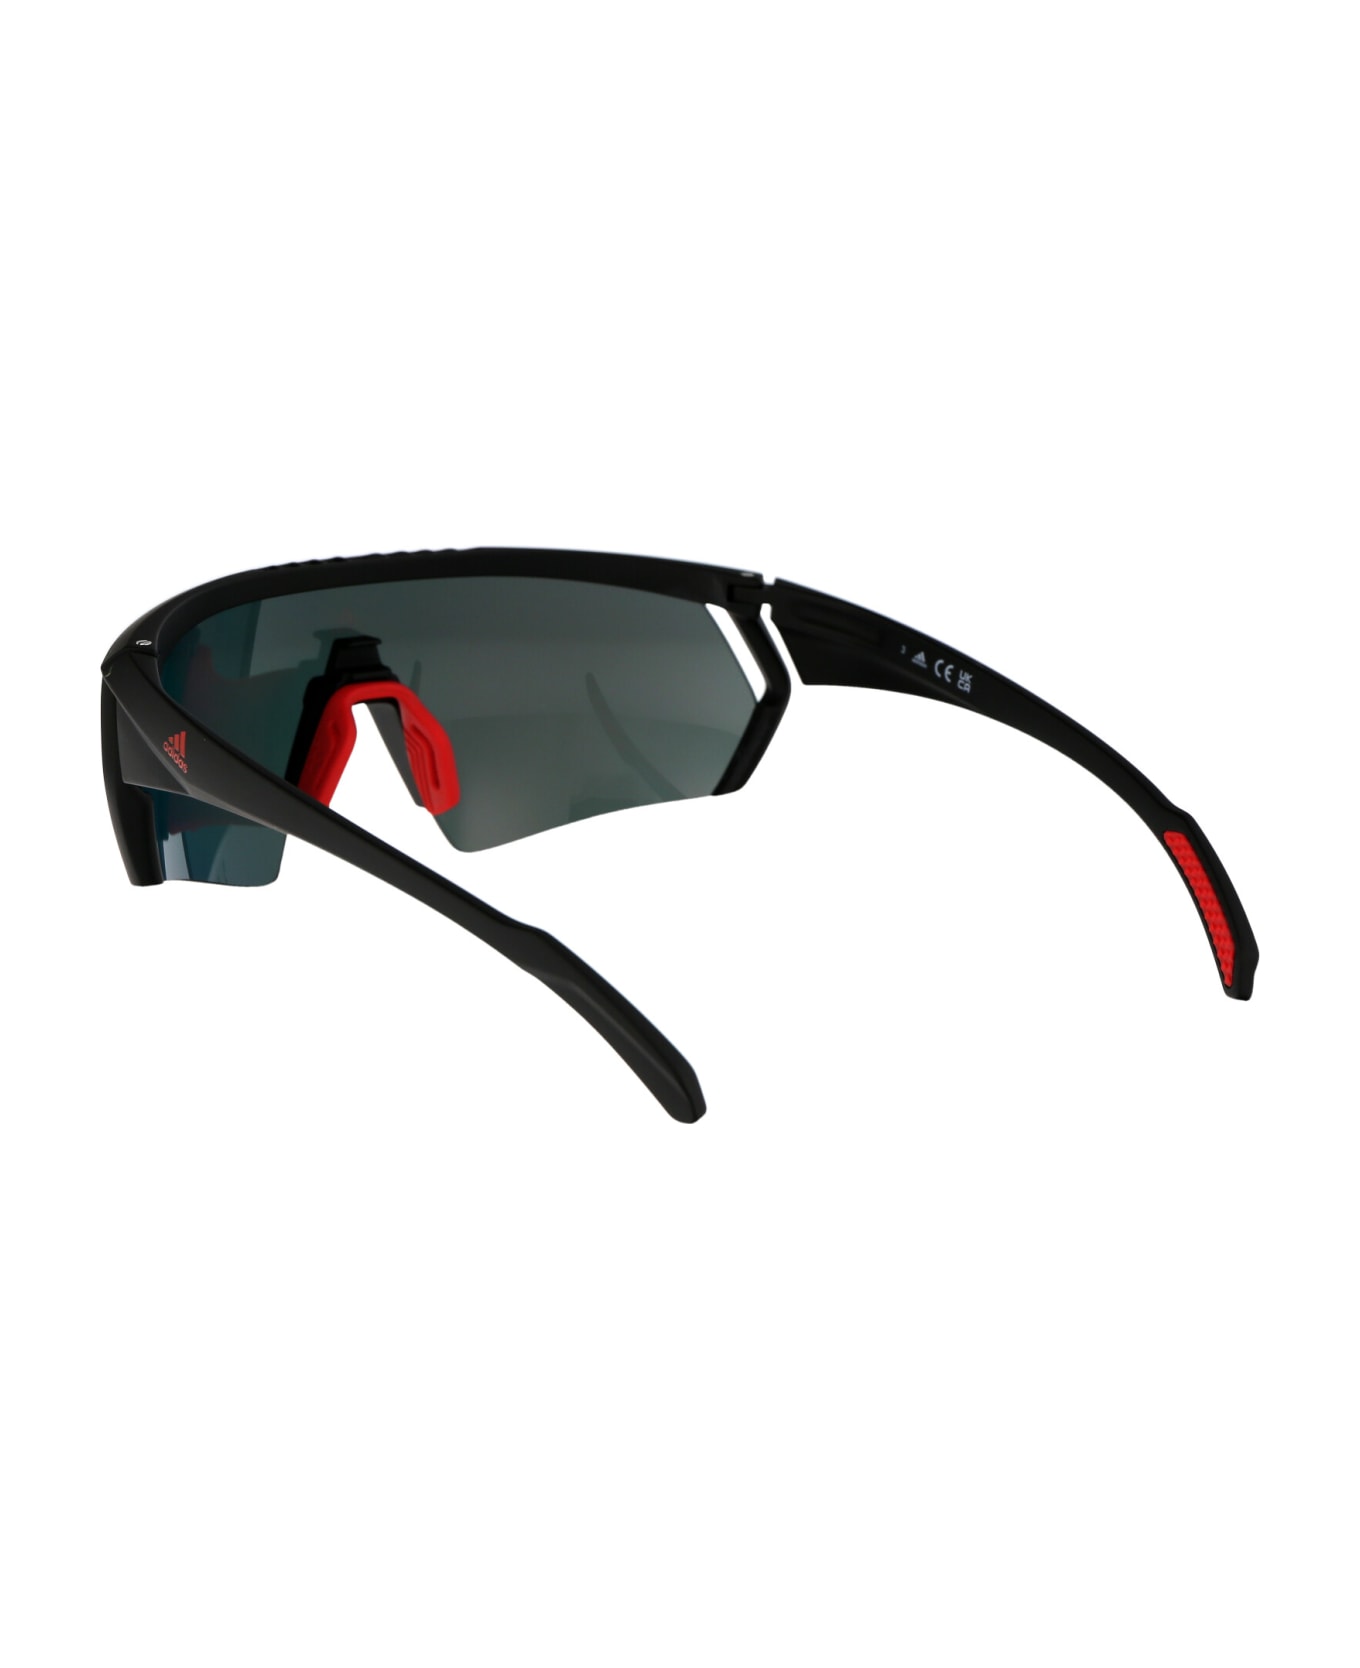 Adidas Cmpt Aero Sunglasses - 02U Nero Opaco/Bordeaux Specchiato